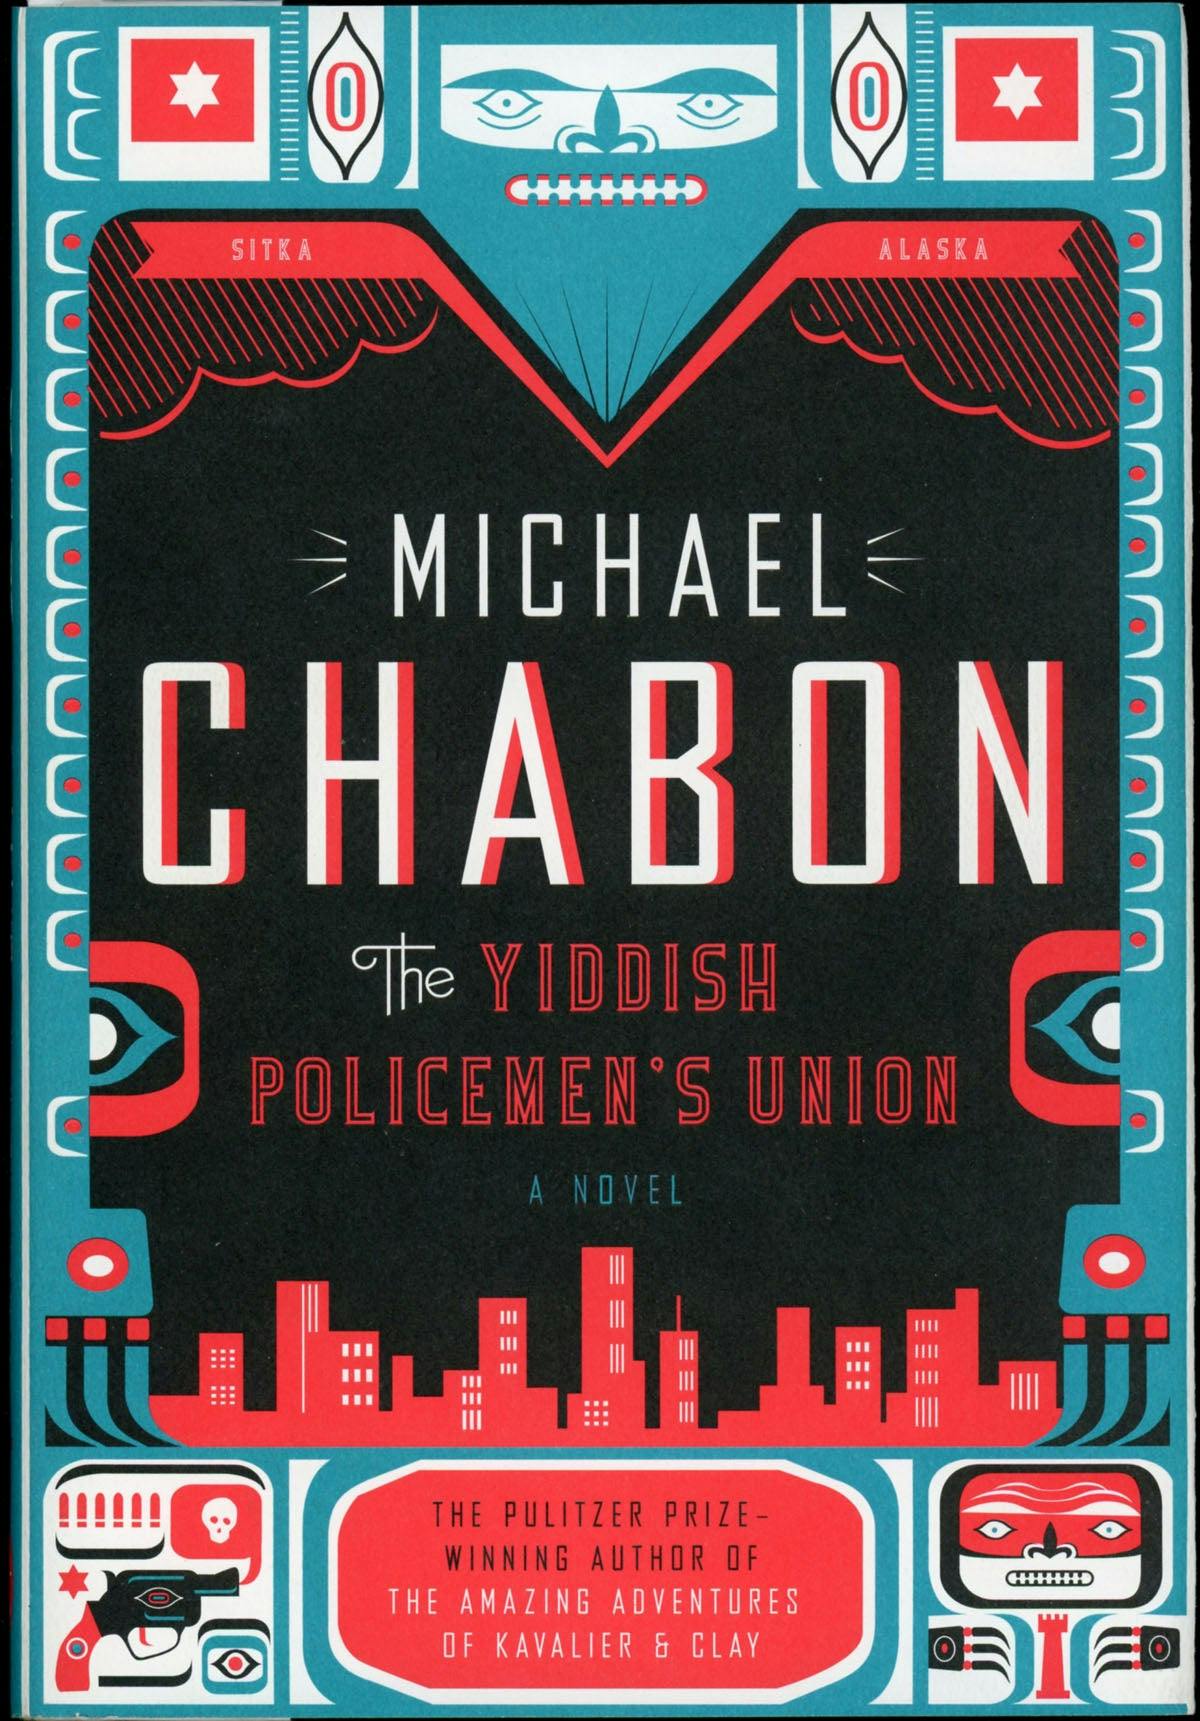 Yiddish Policeman's Union